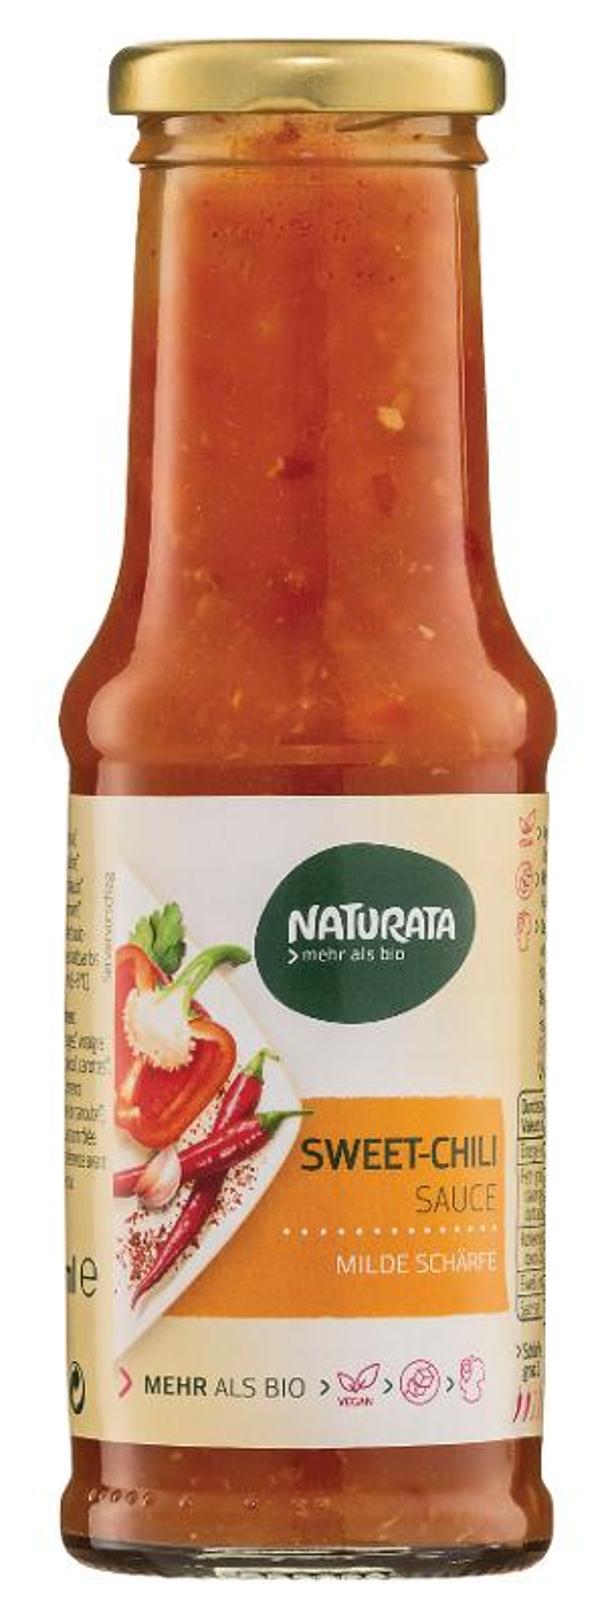 Produktfoto zu Sweet Chili Sauce 210 ml Naturata